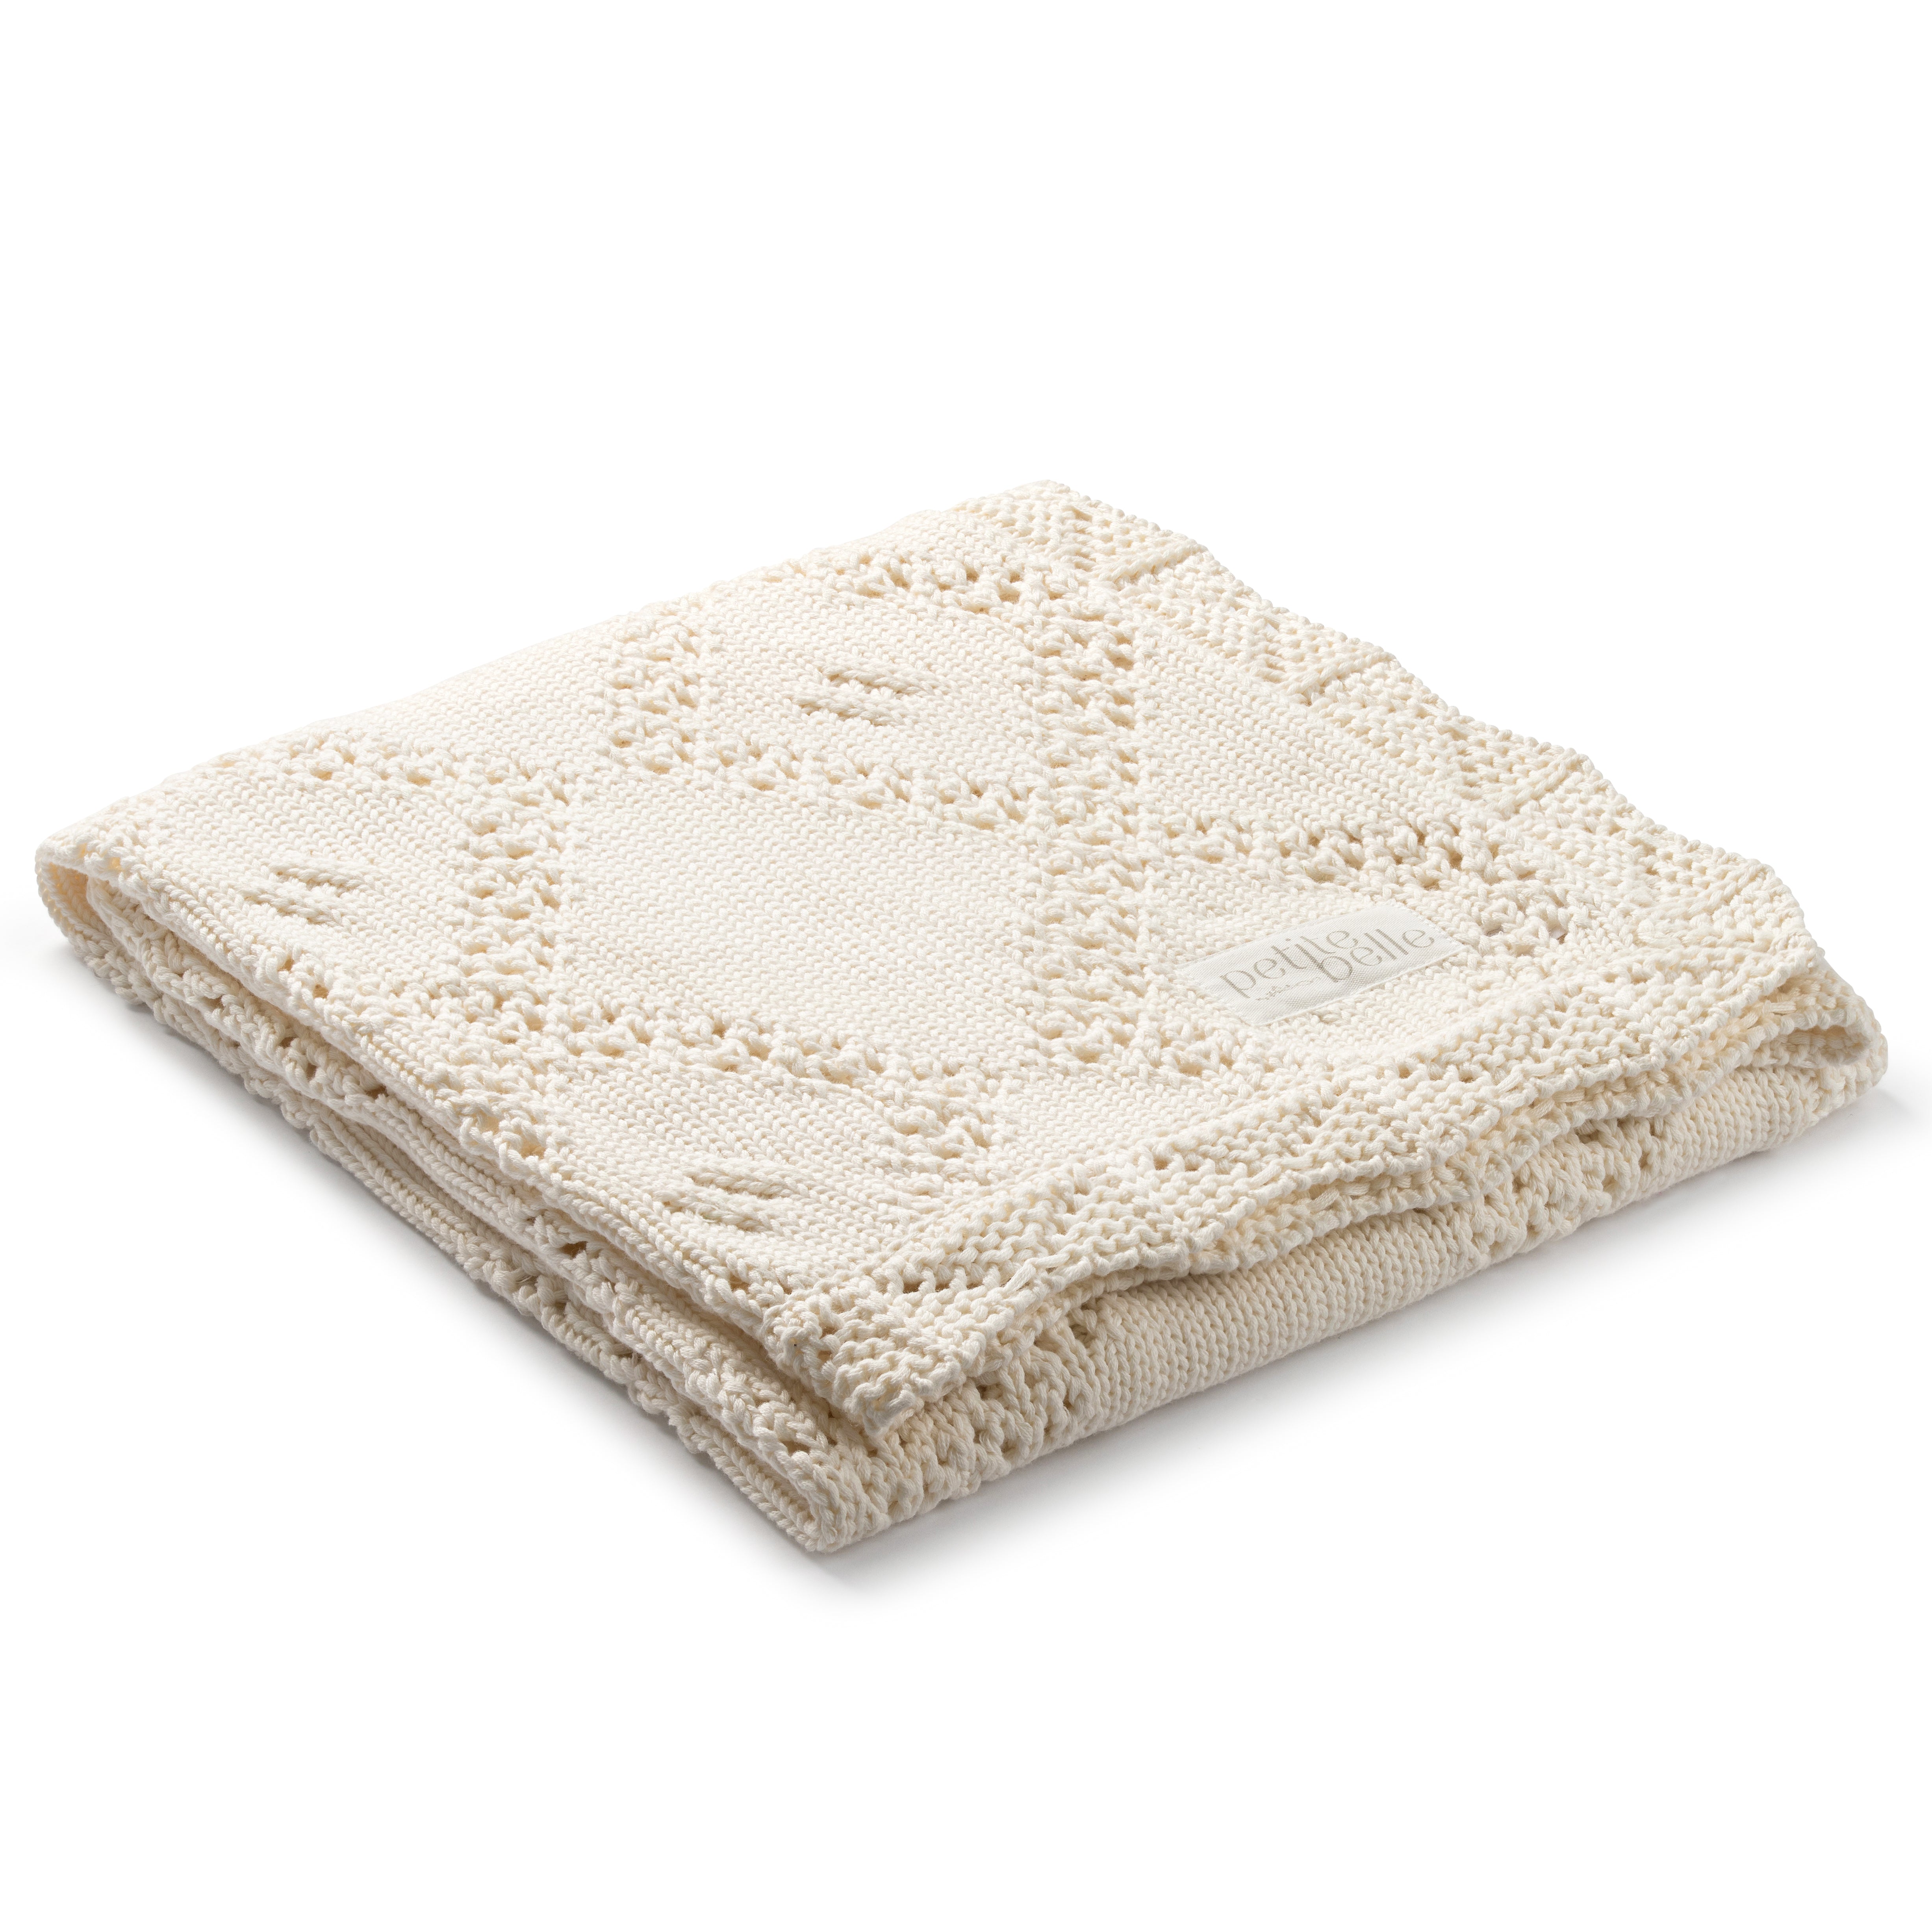 Petite Belle Ivory Diamond Crochet Knit Blanket & Pouch Set